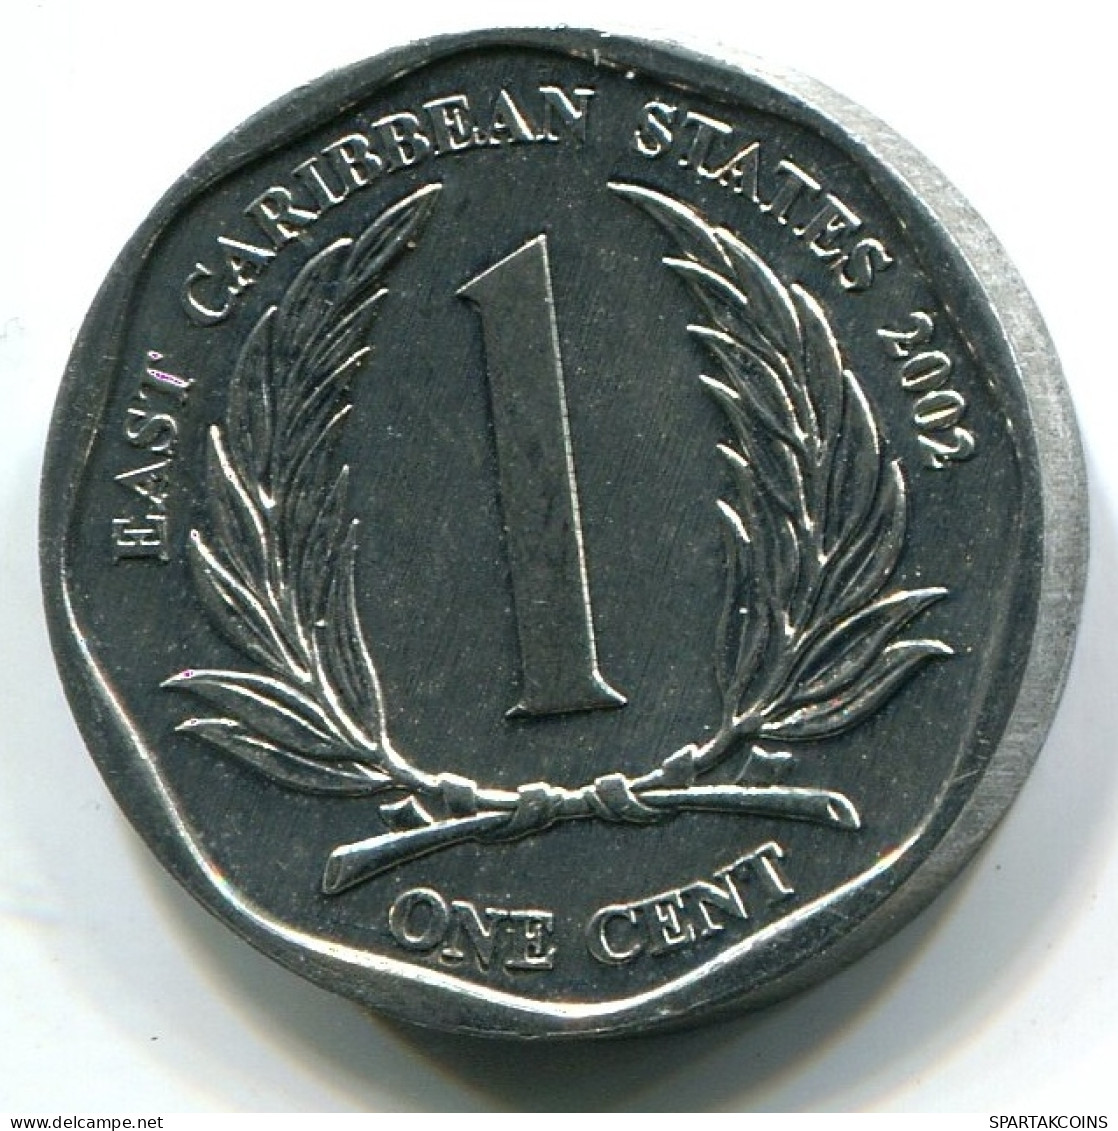 1 CENT 2002 EAST CARIBBEAN UNC Coin #W10907.U - Oost-Caribische Staten